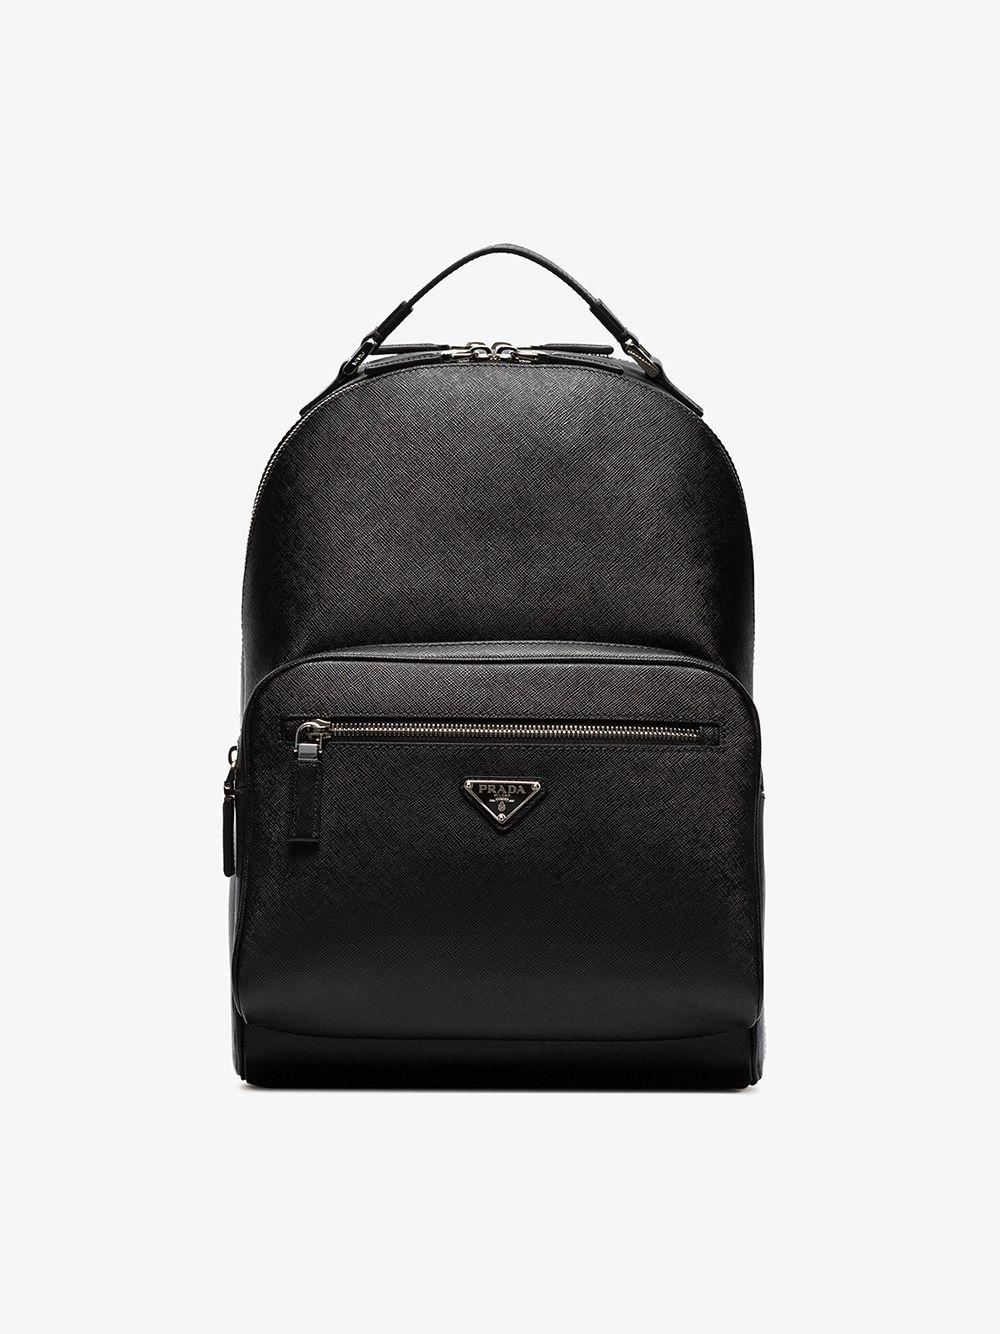 prada saffiano leather backpack